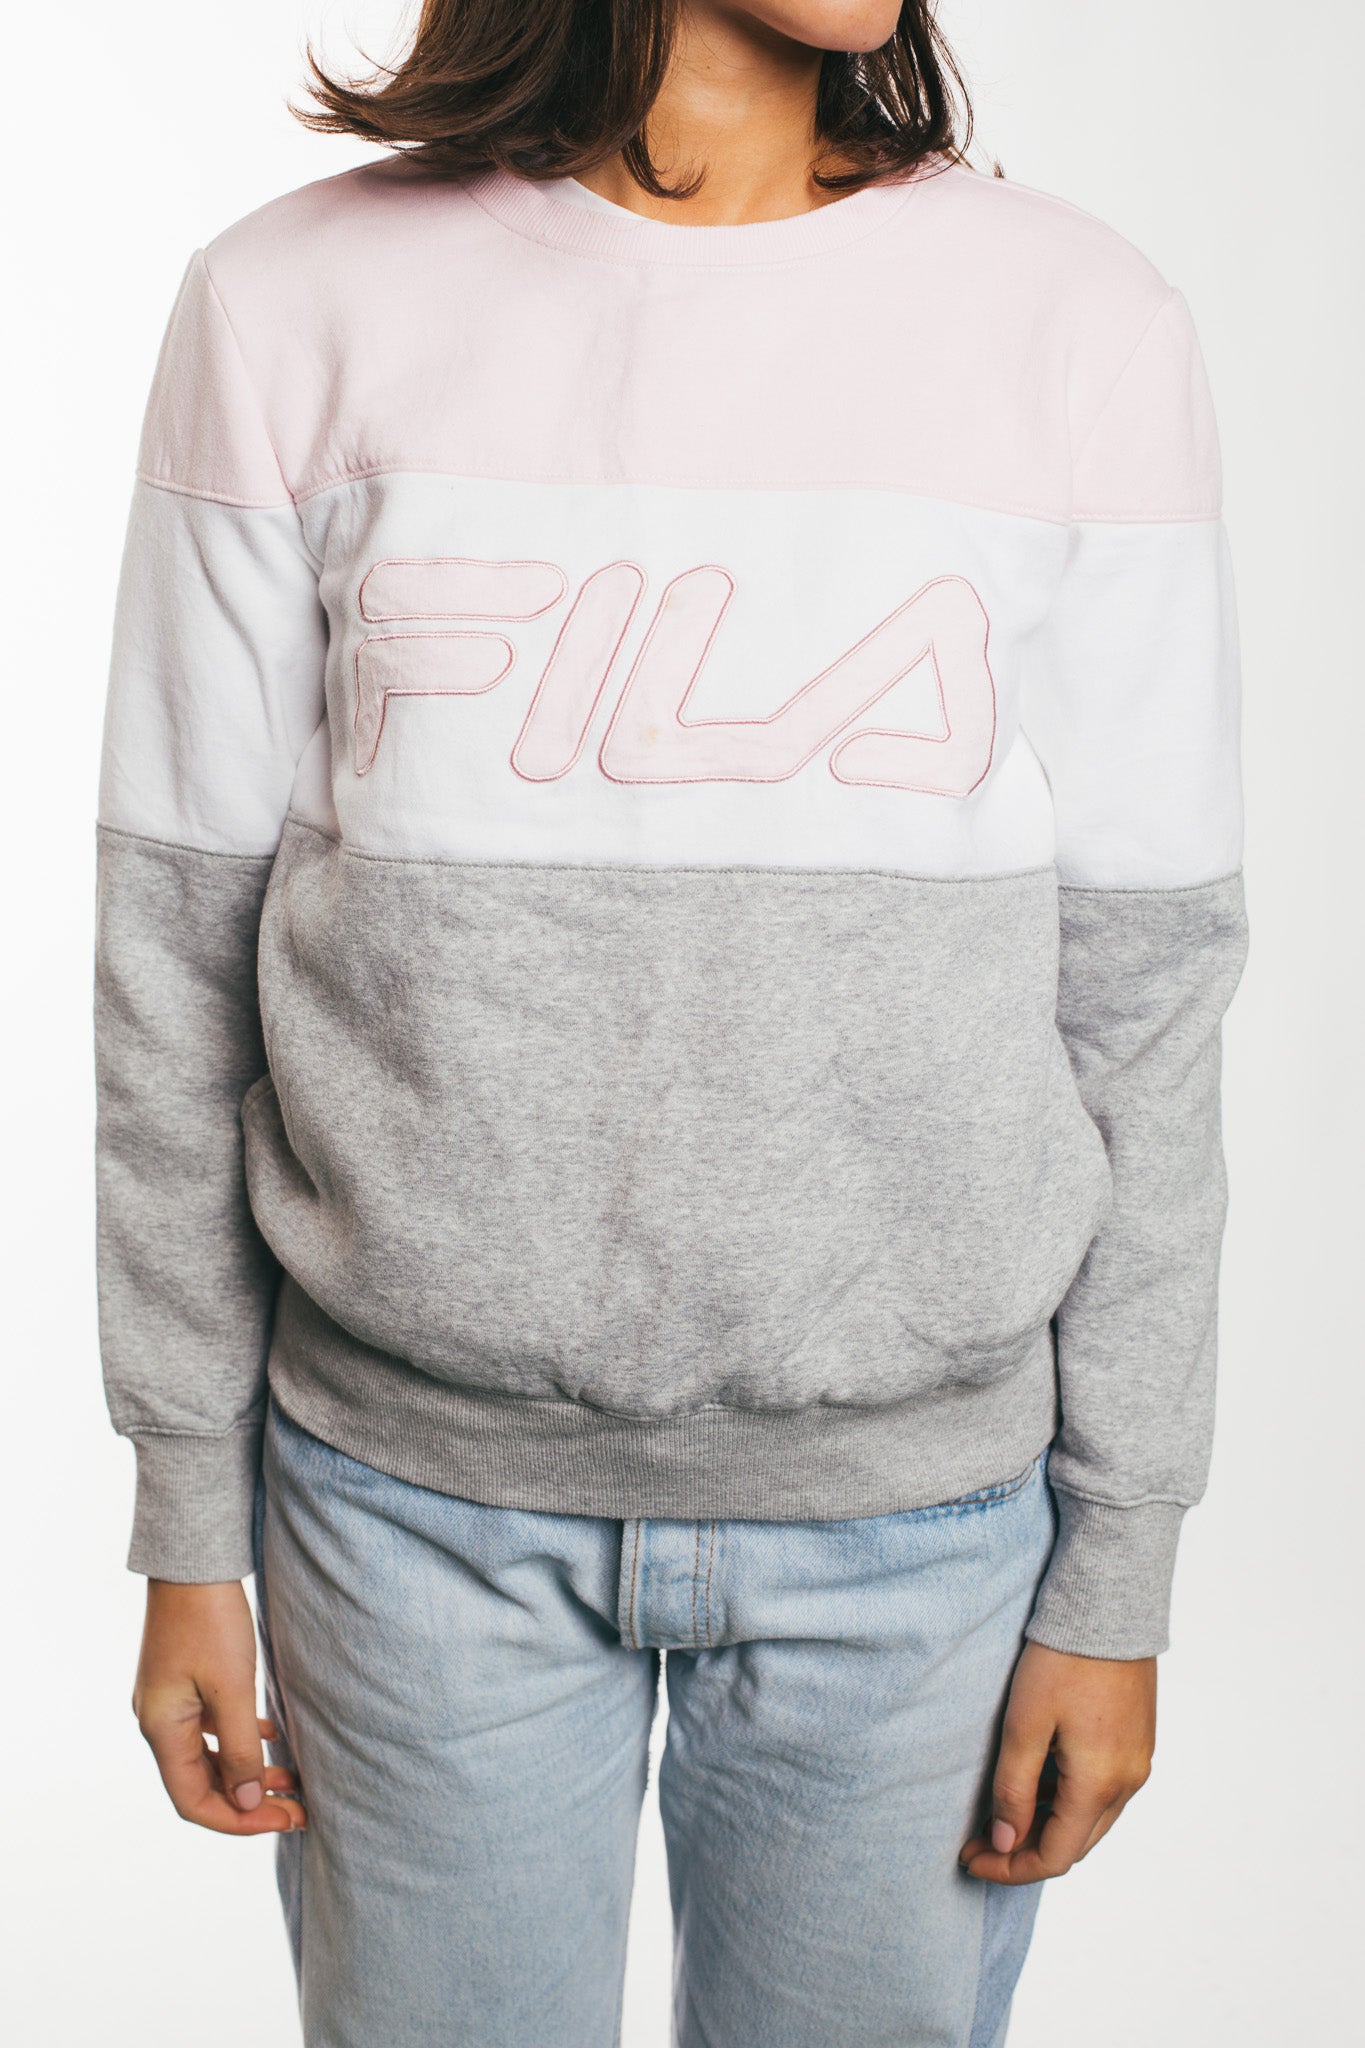 Fila - Sweatshirt